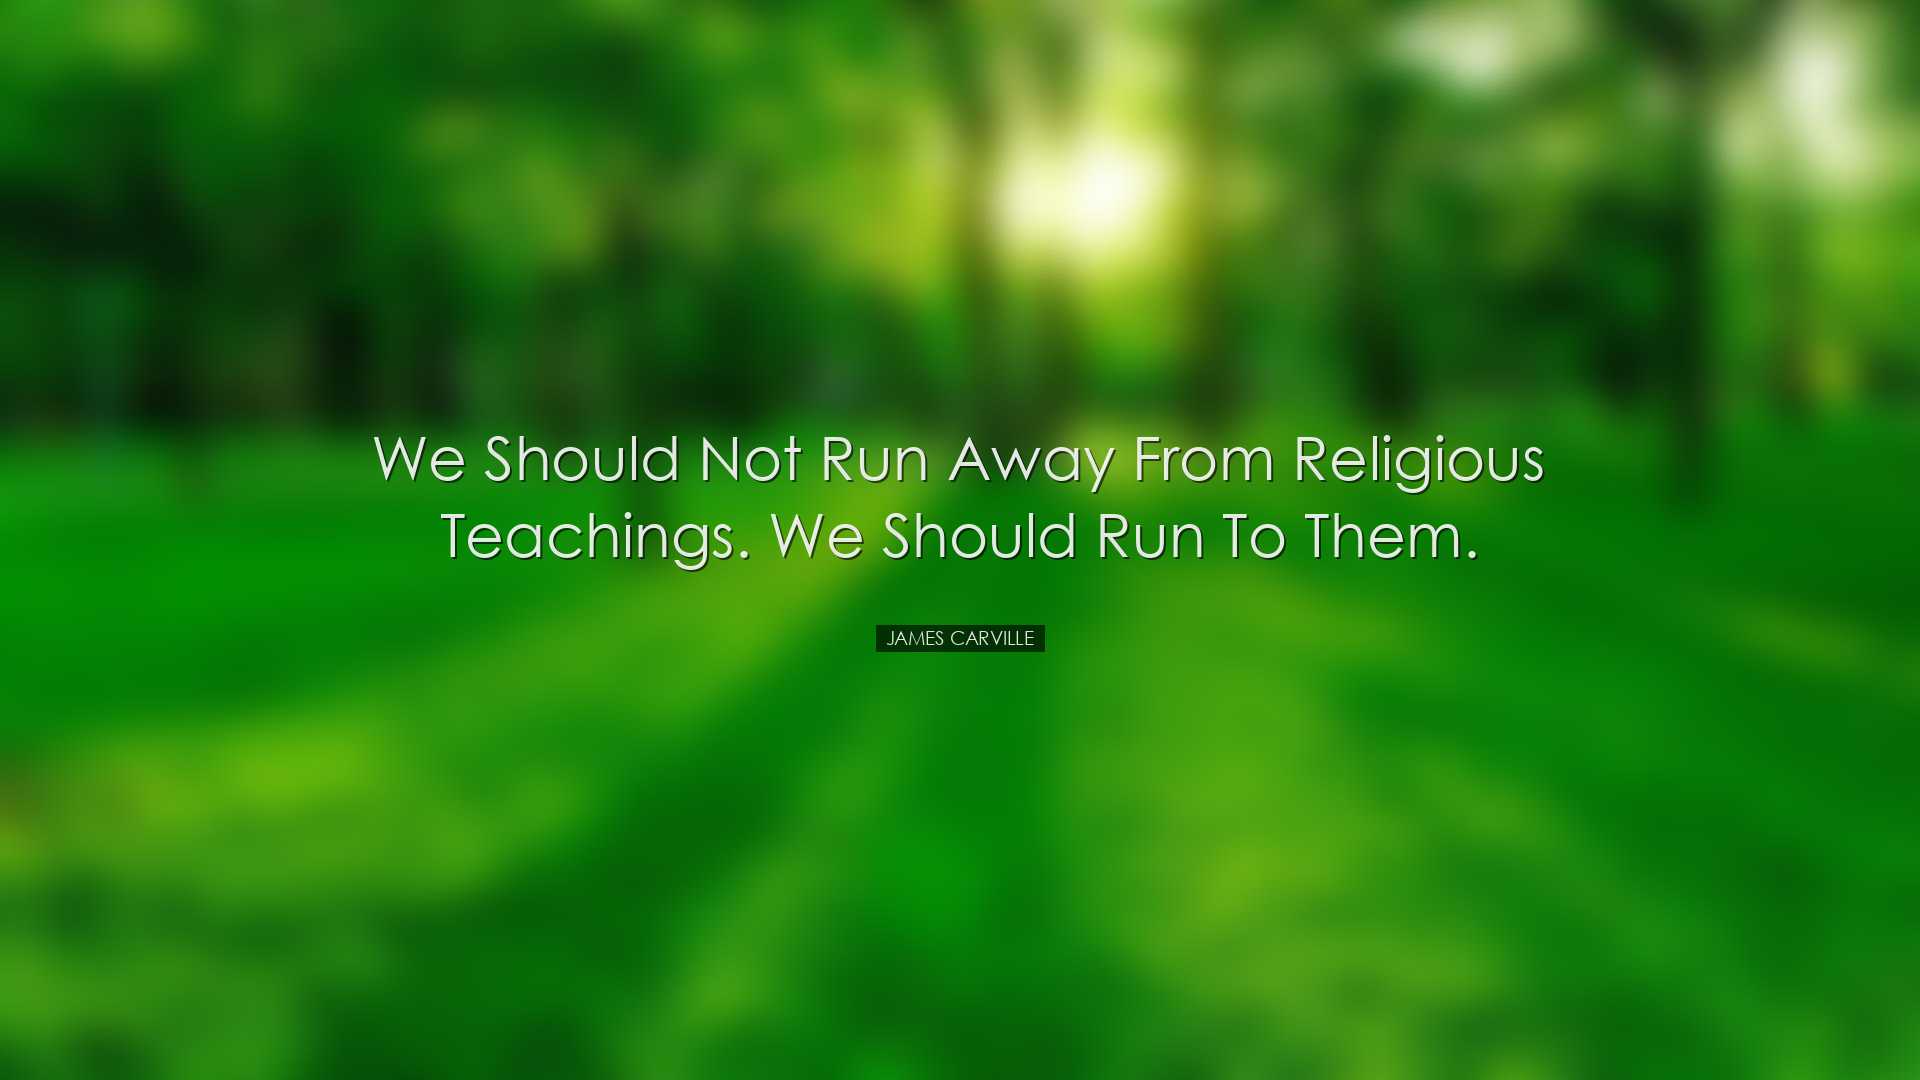 We should not run away from religious teachings. We should run to